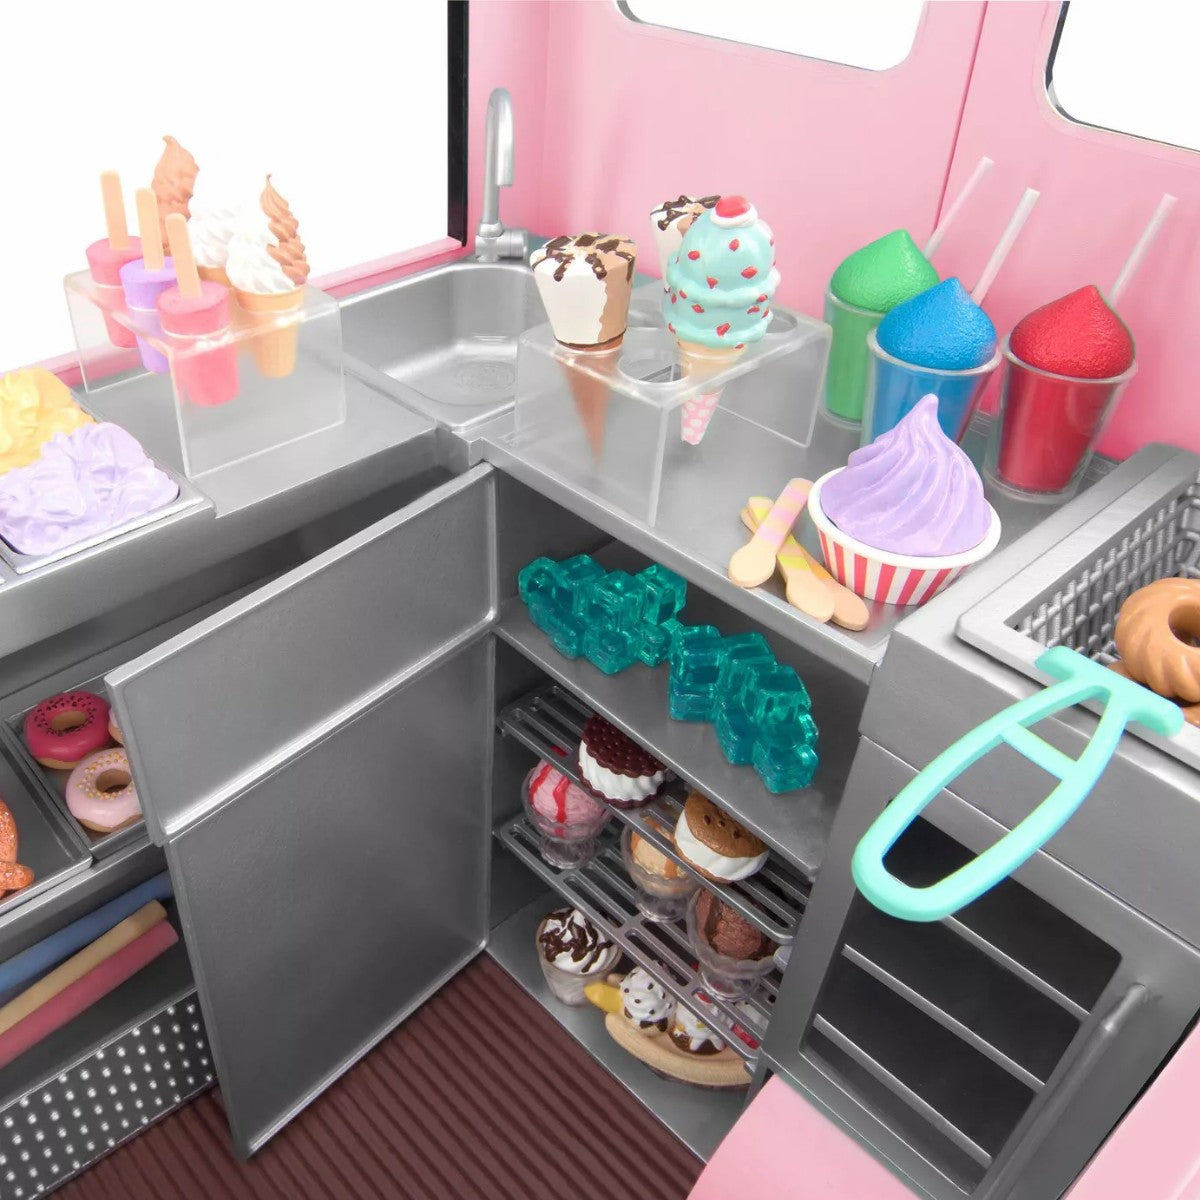 Our Generation Ice cream truck, lyserød